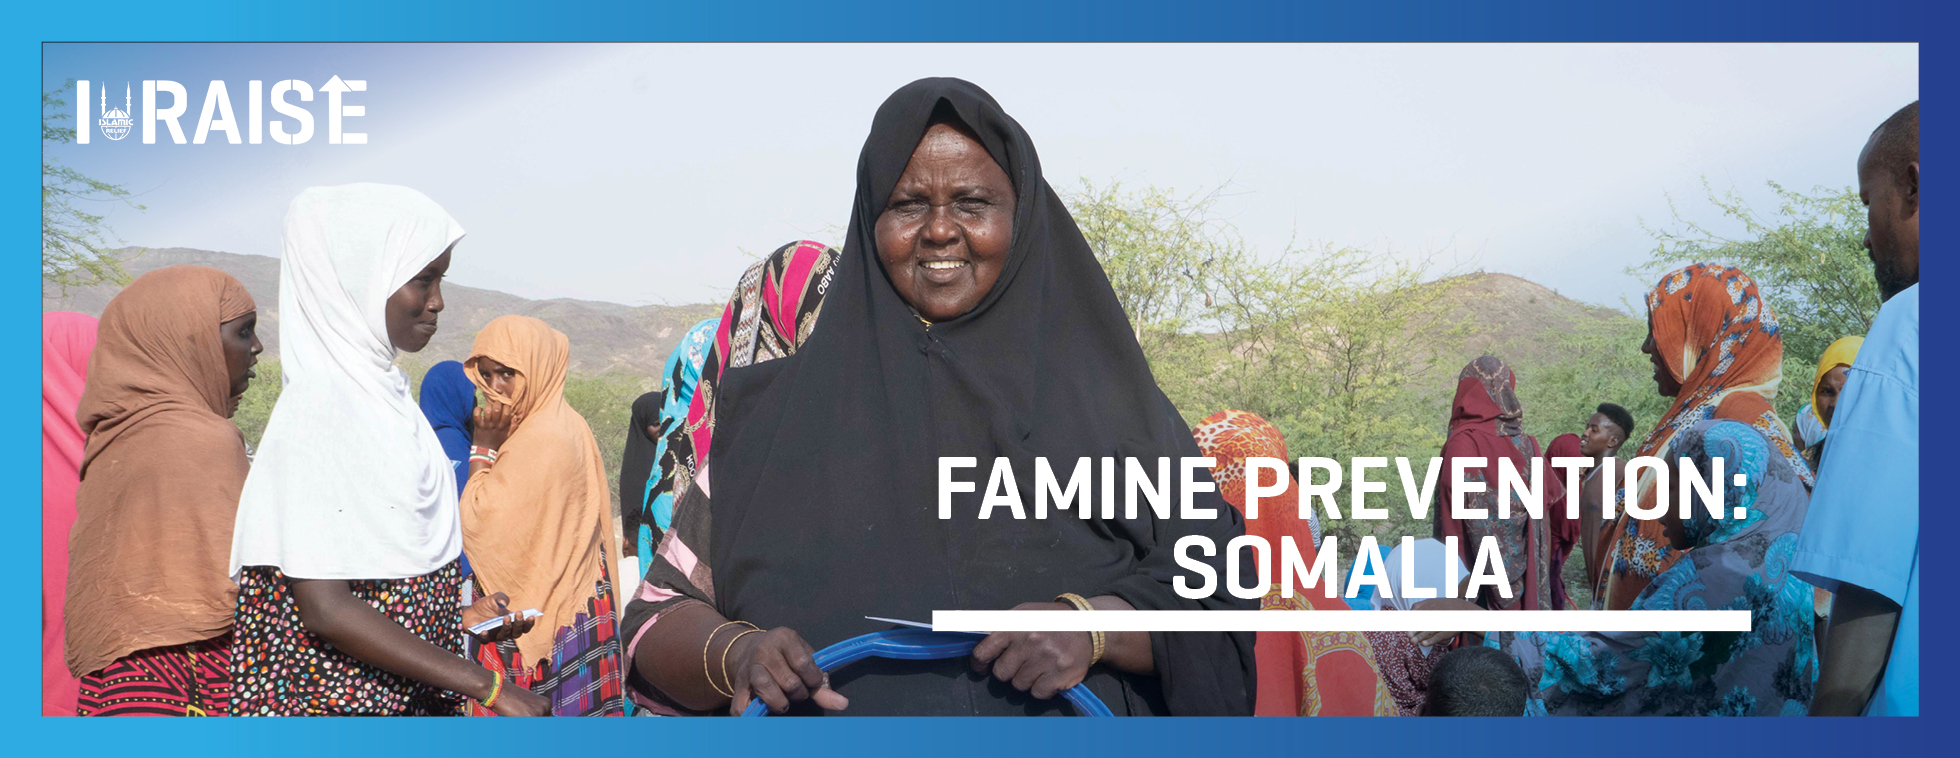 IRaise For Somalia Famine Project